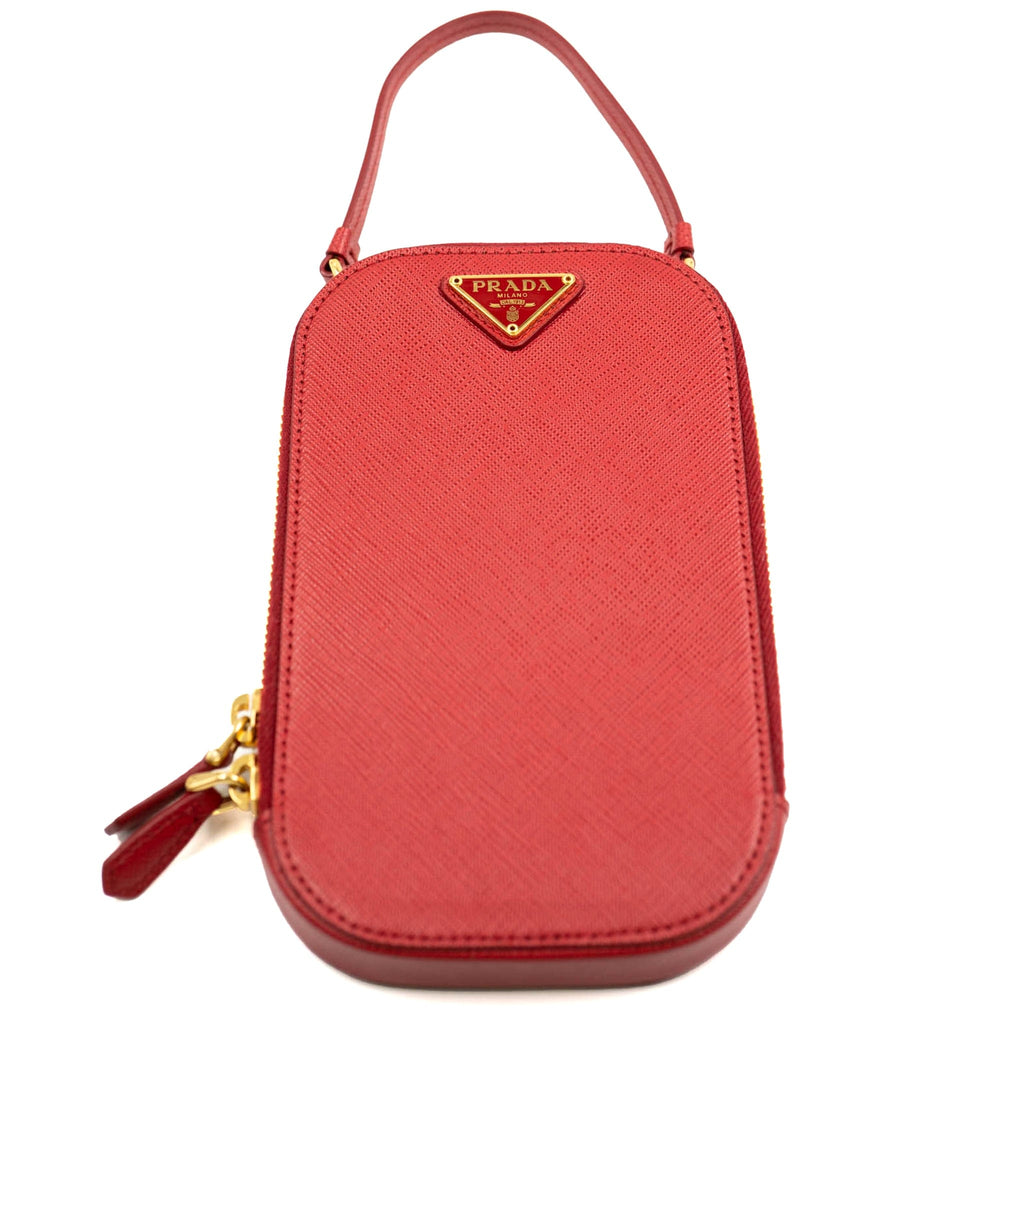 Prada Red Saffiano Leather Flap Crossbody Bag